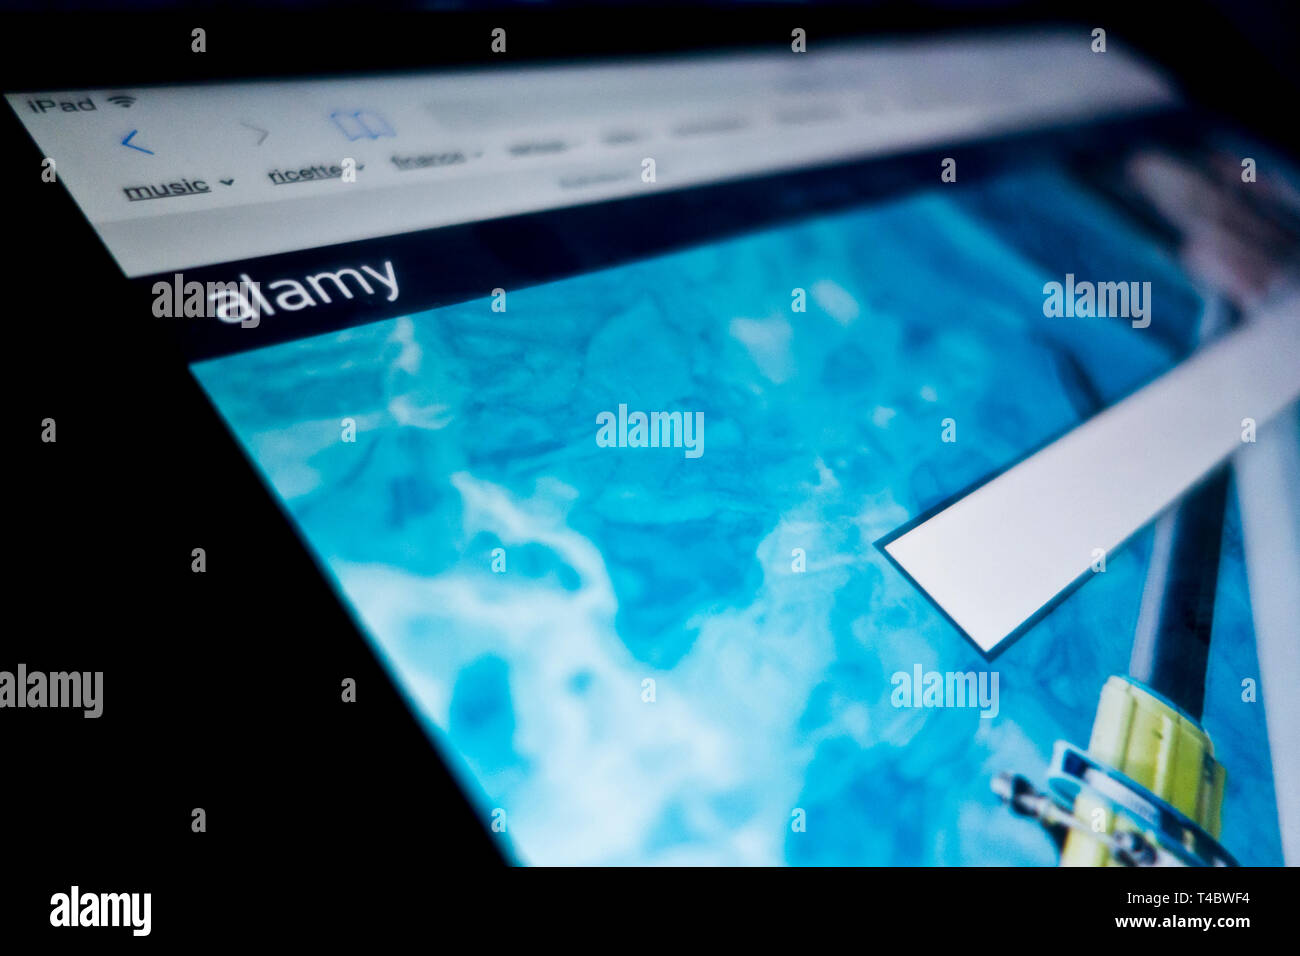 Alamy site screen Banque D'Images